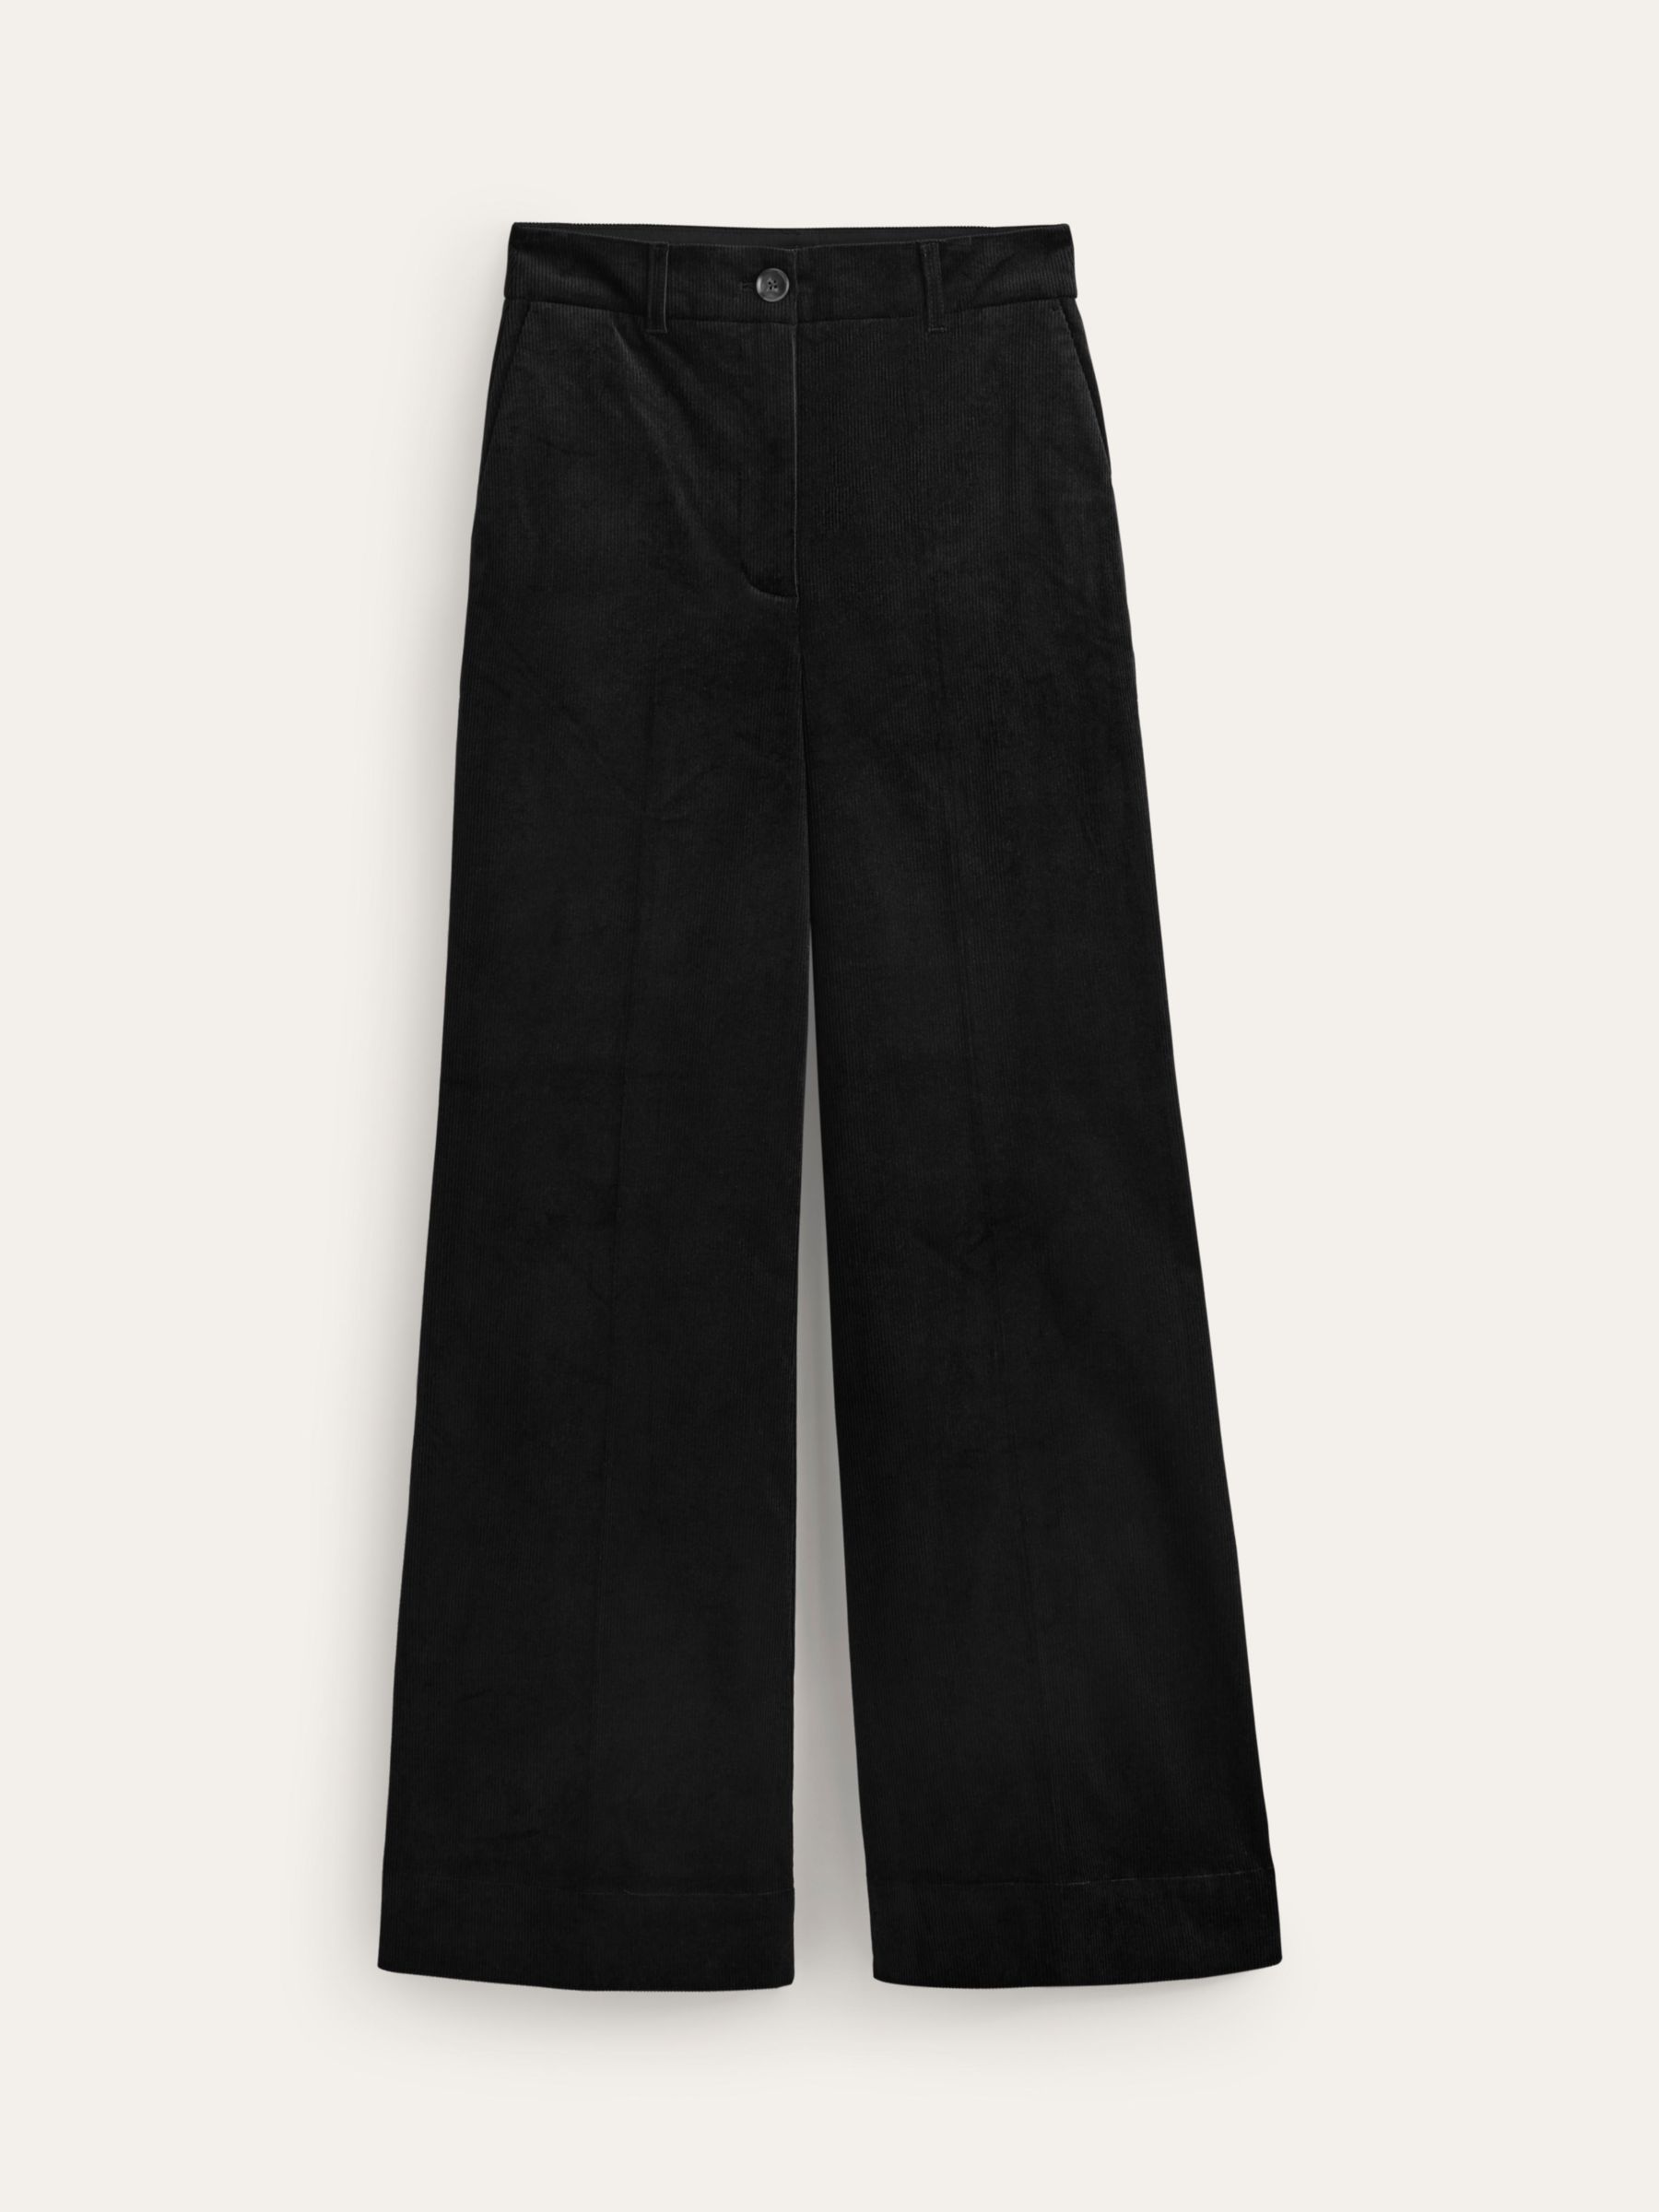 Boden Wide Leg Corduroy Trousers, Black, 8